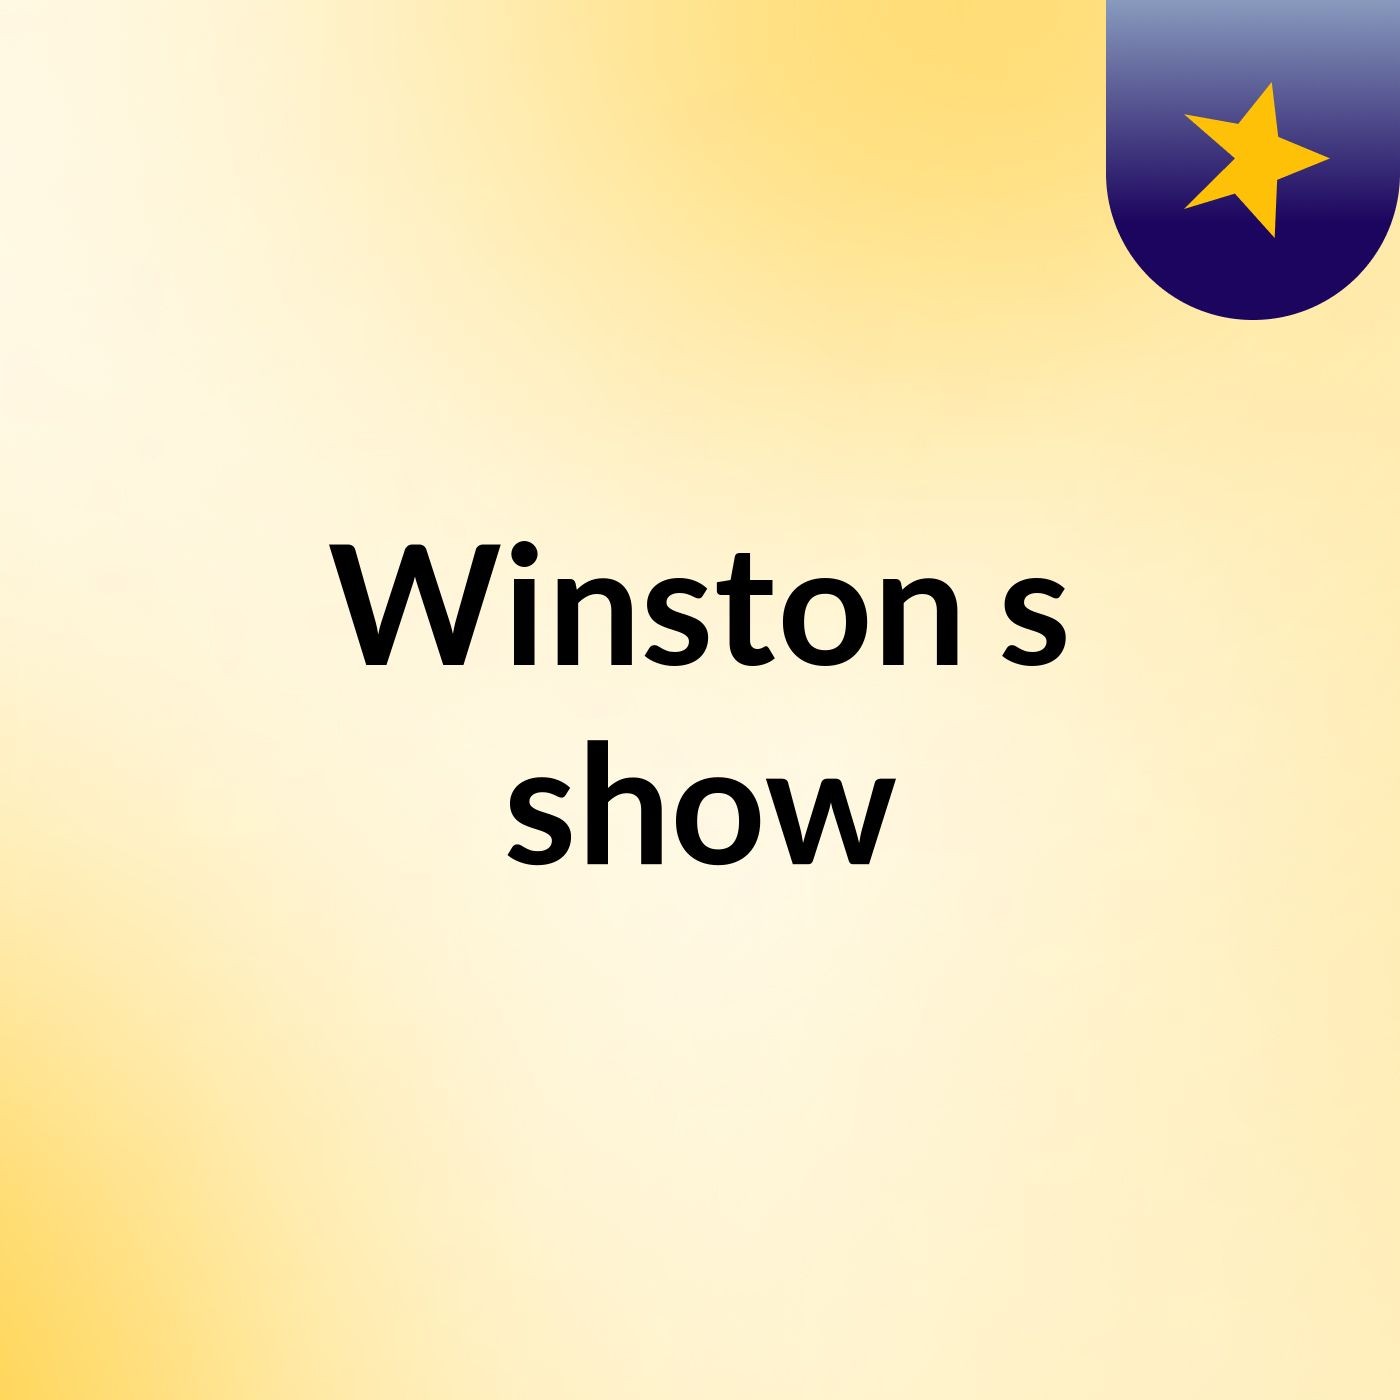 Winston's show